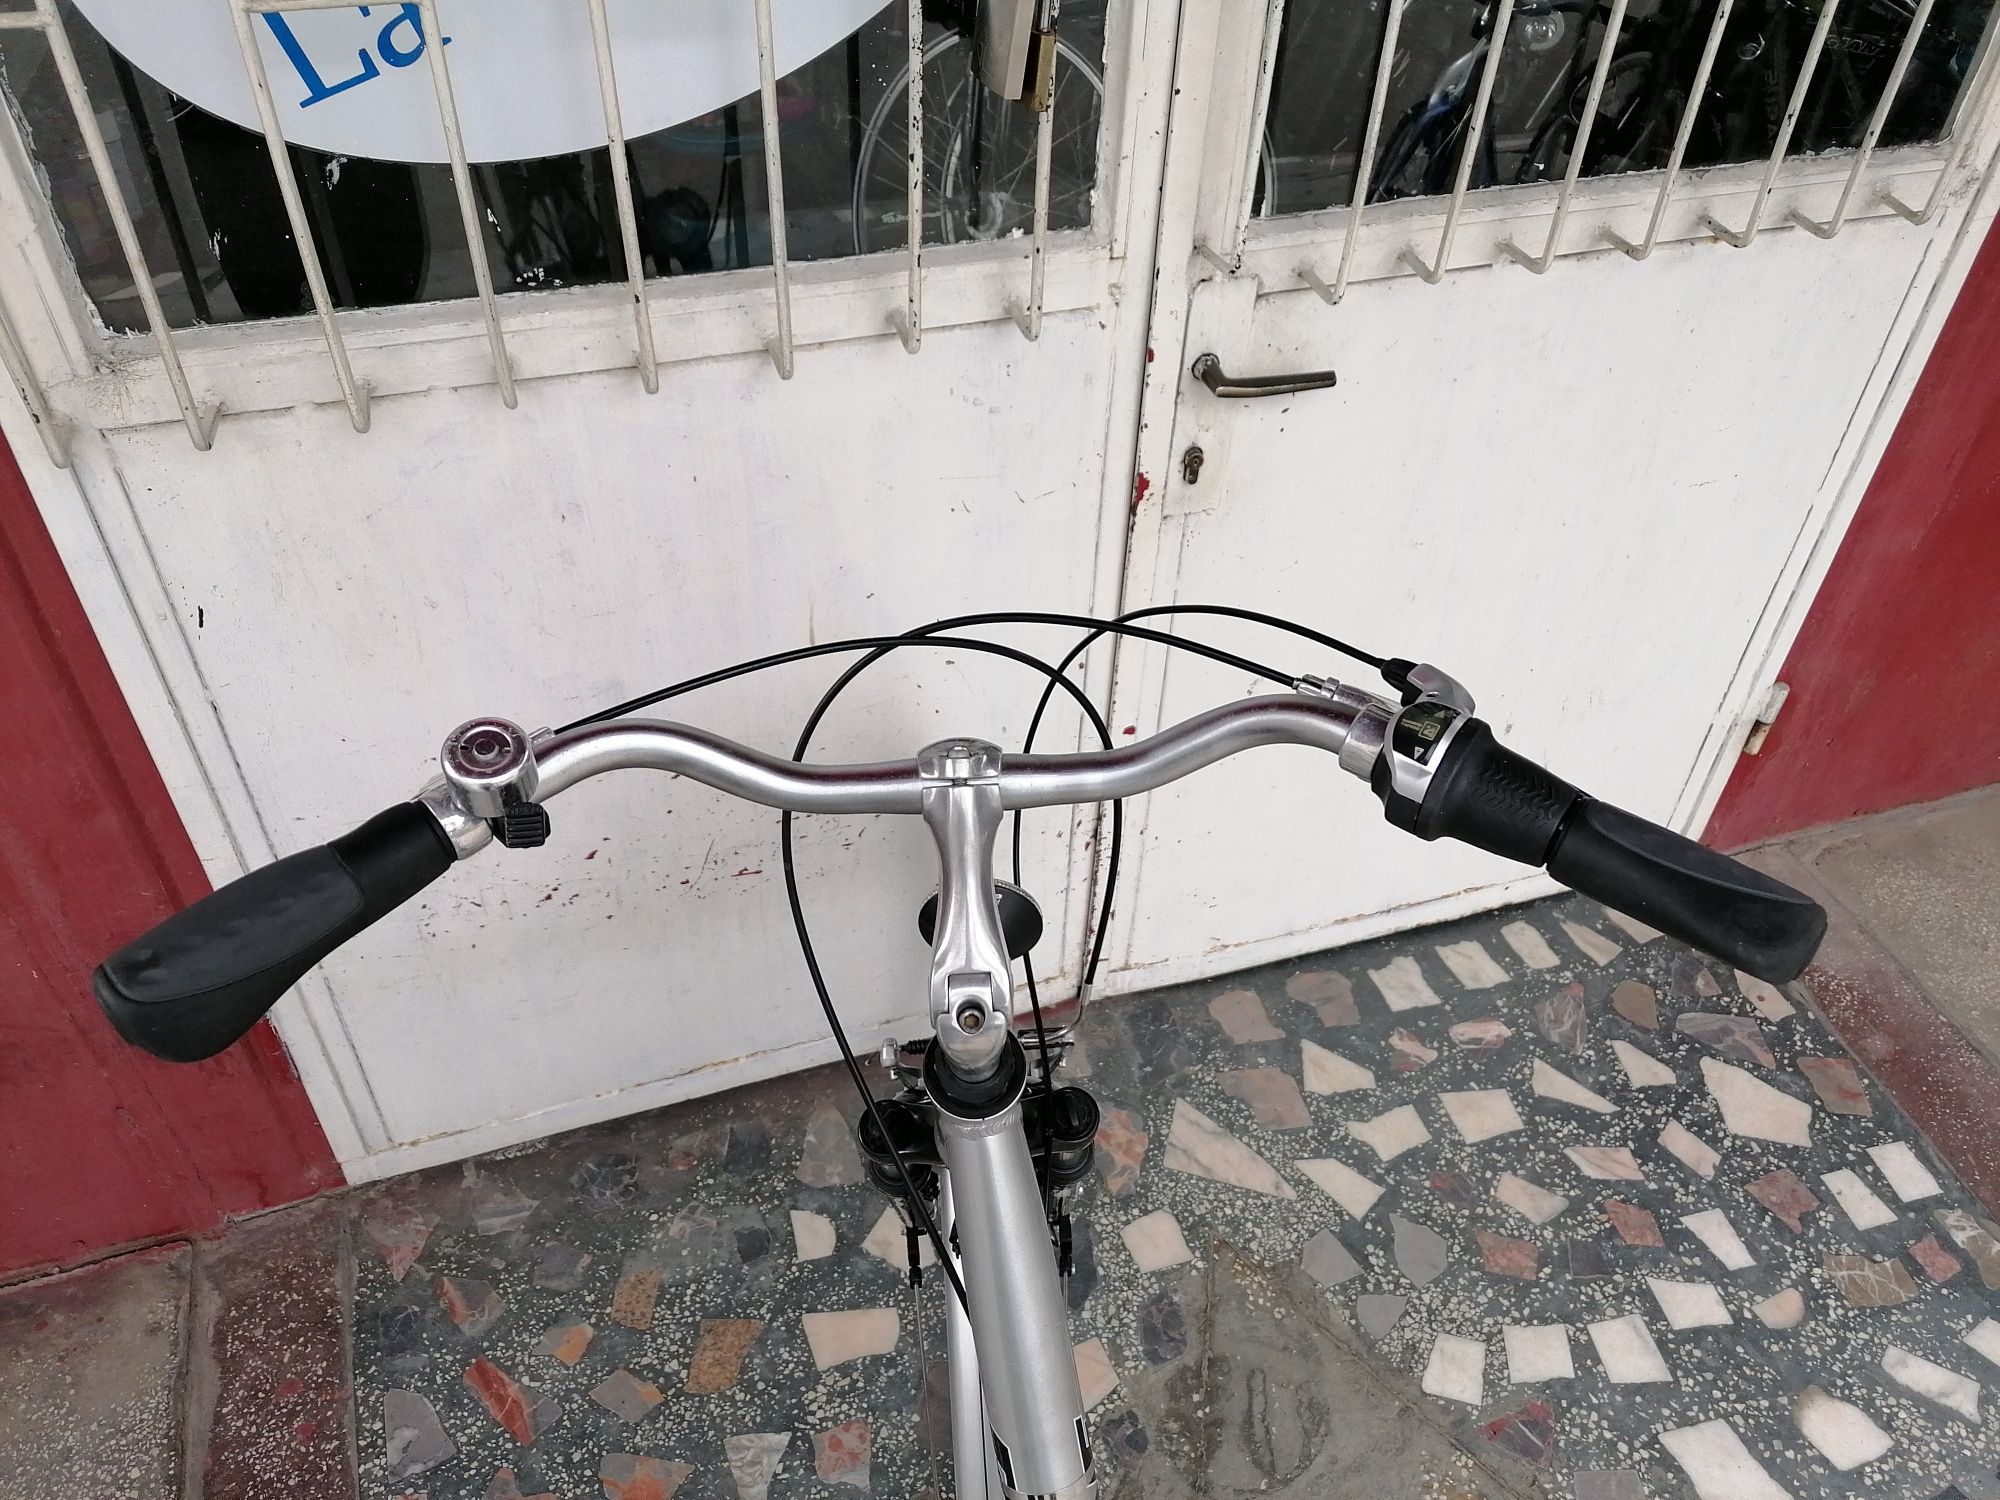 Bicicleta de dama Rixe de 28